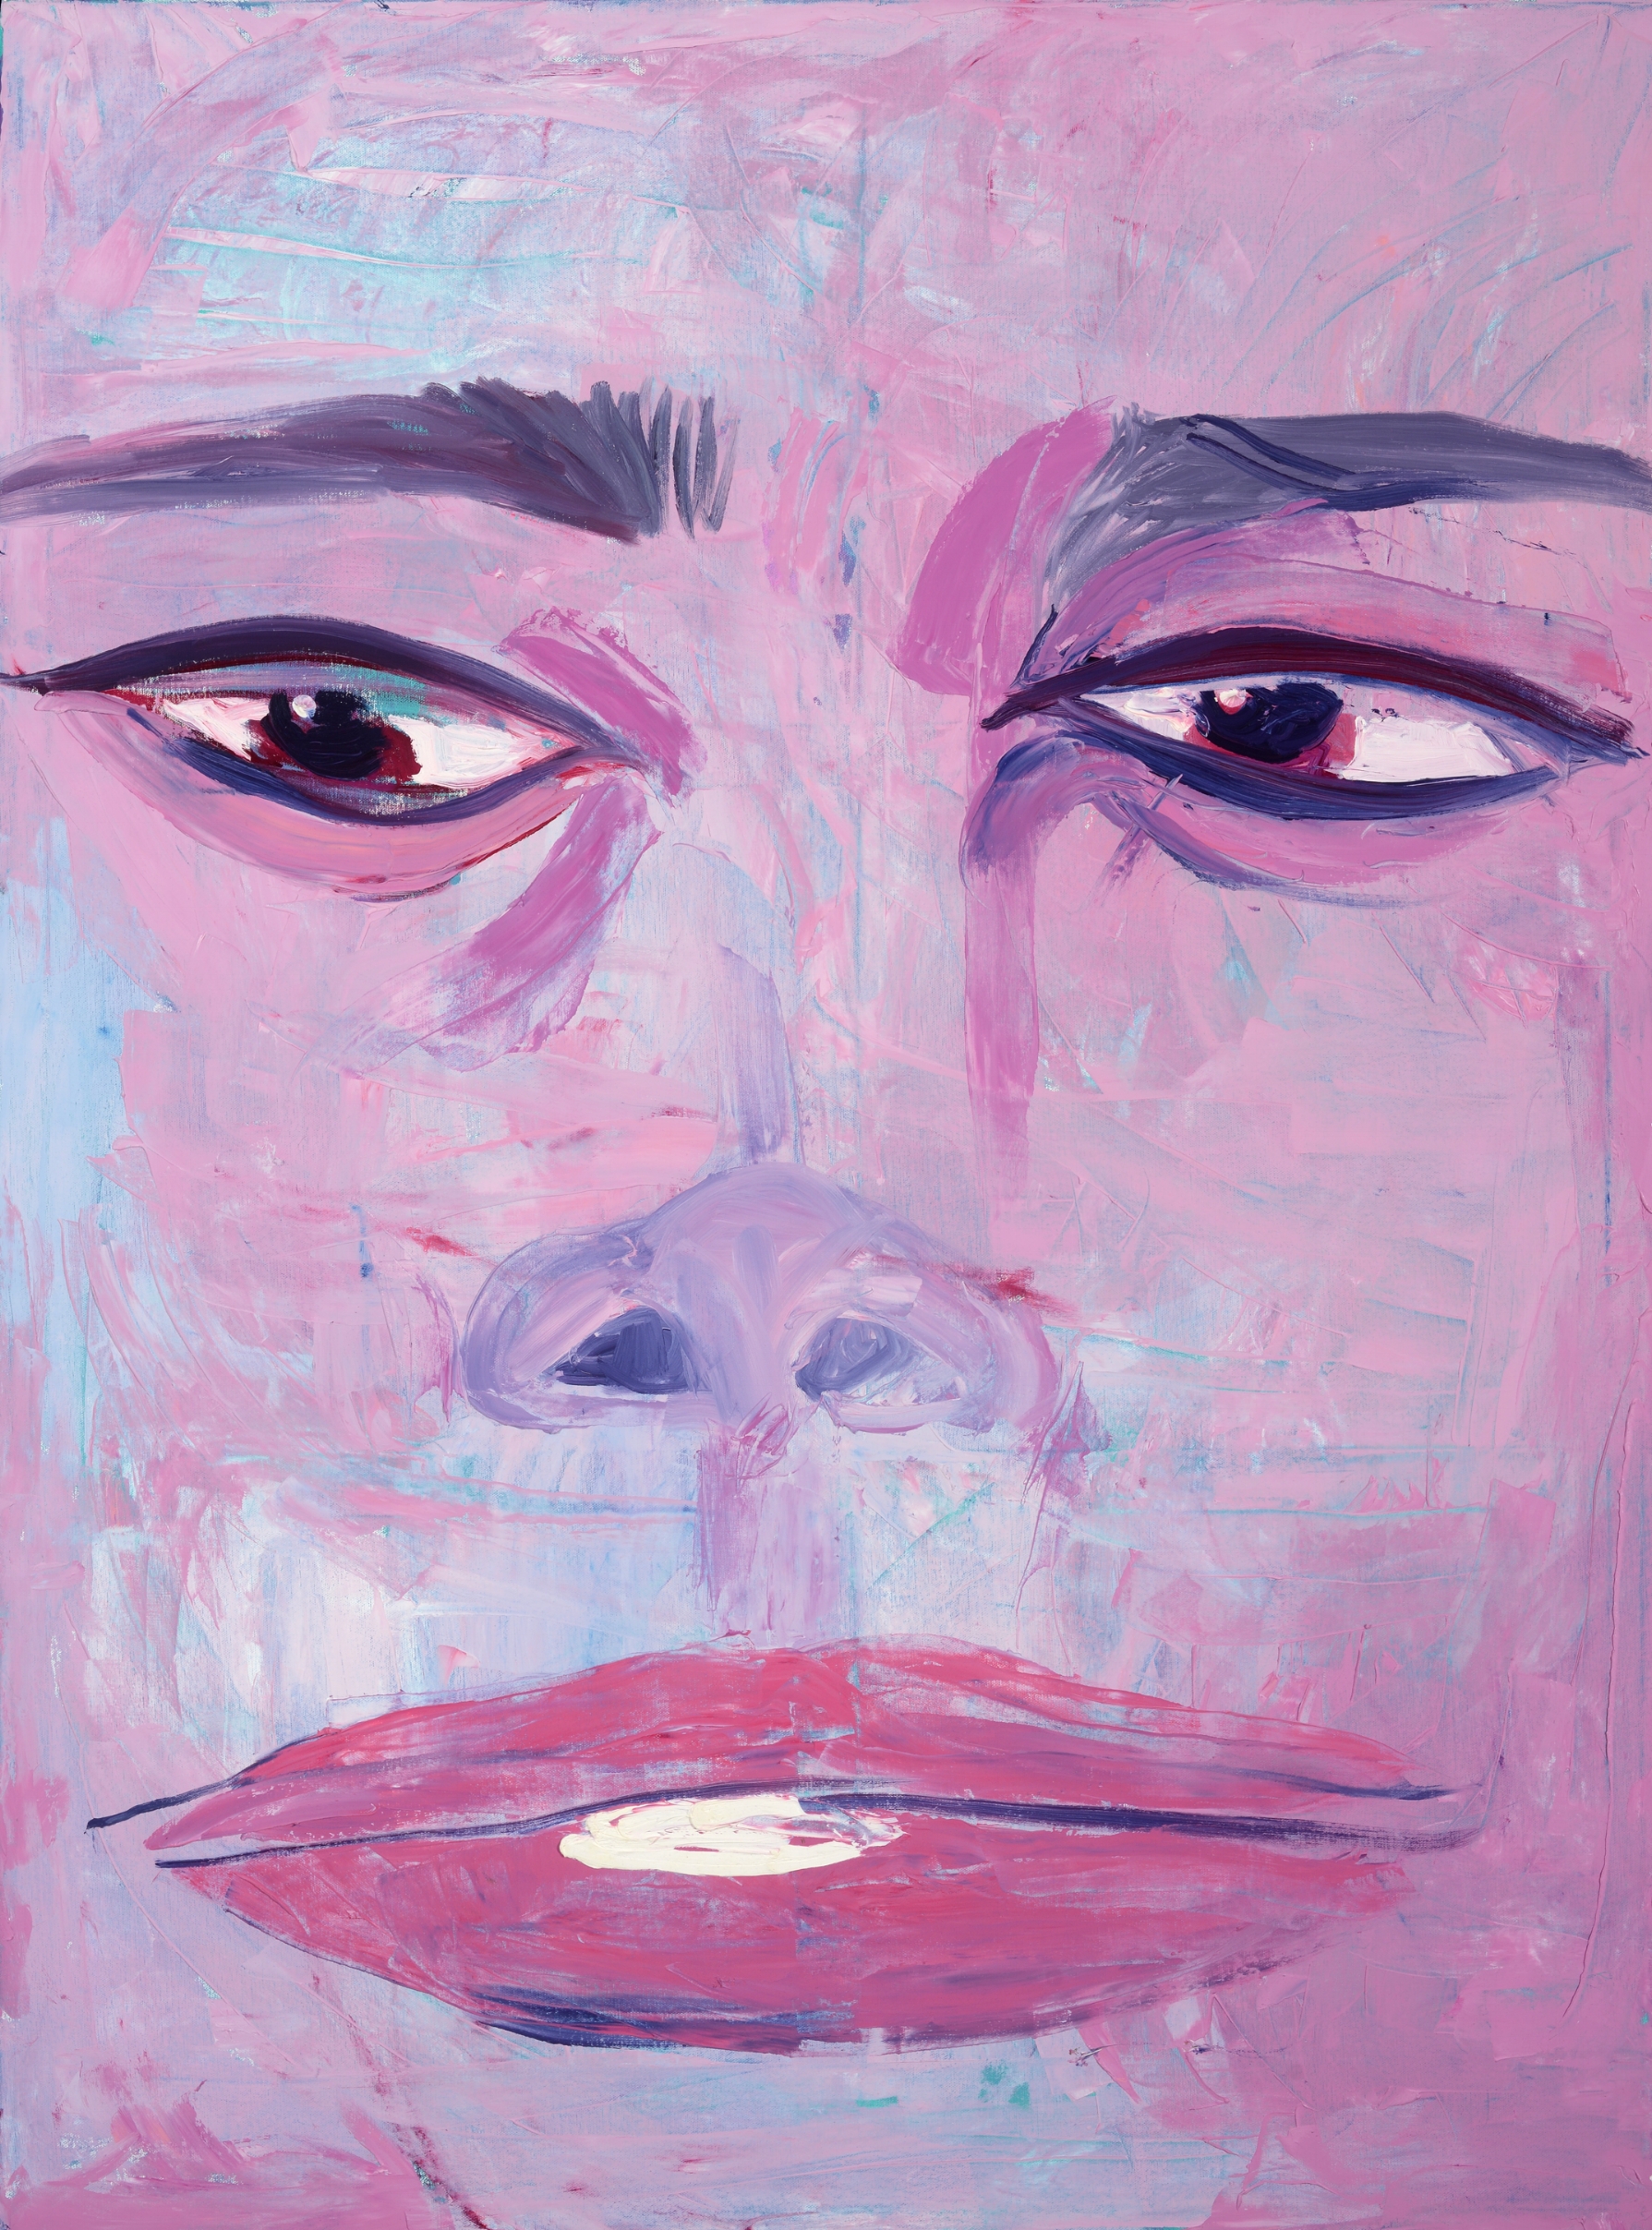 Lizard lips. Oil and acrylic on canvas. 2015.